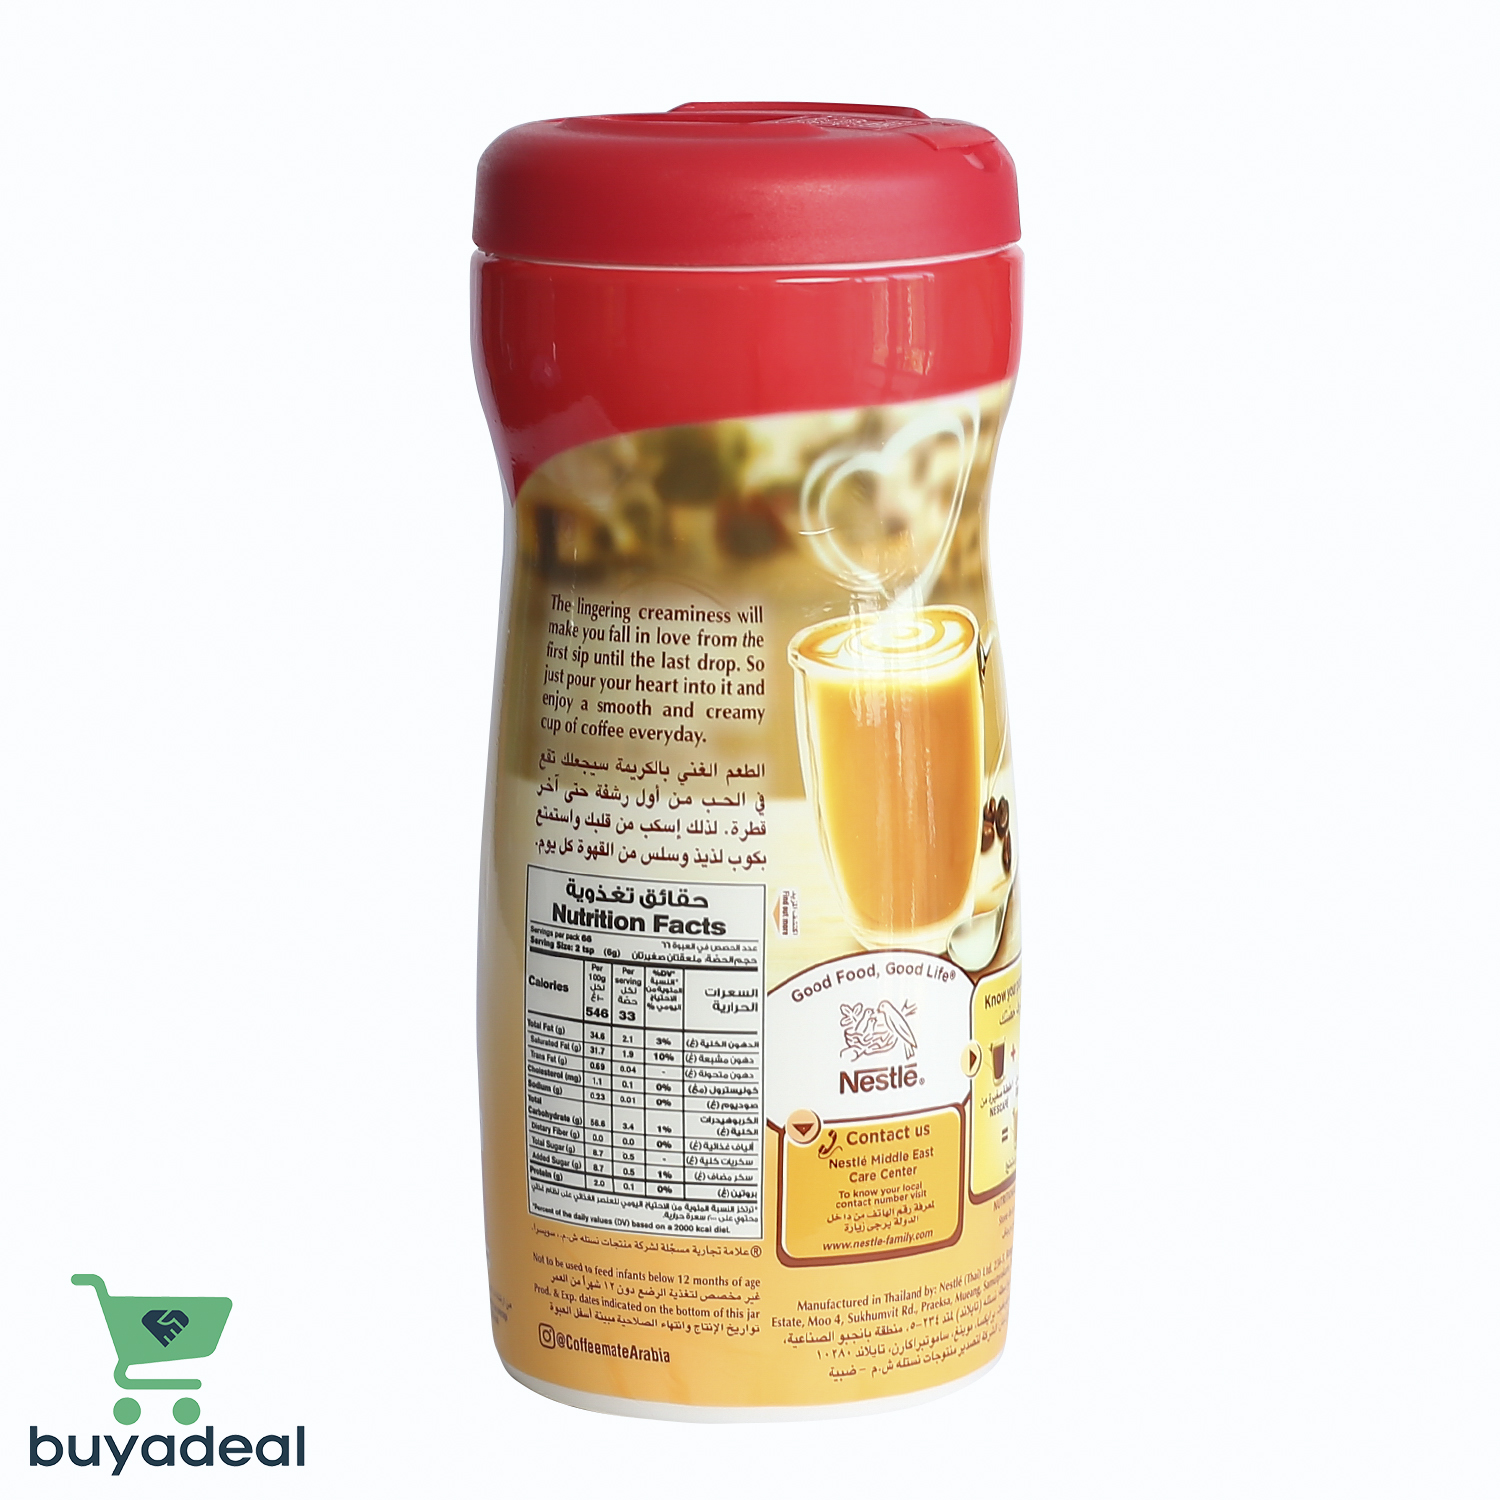 Buyadeal Product Nescafe Coffee Mate 170g